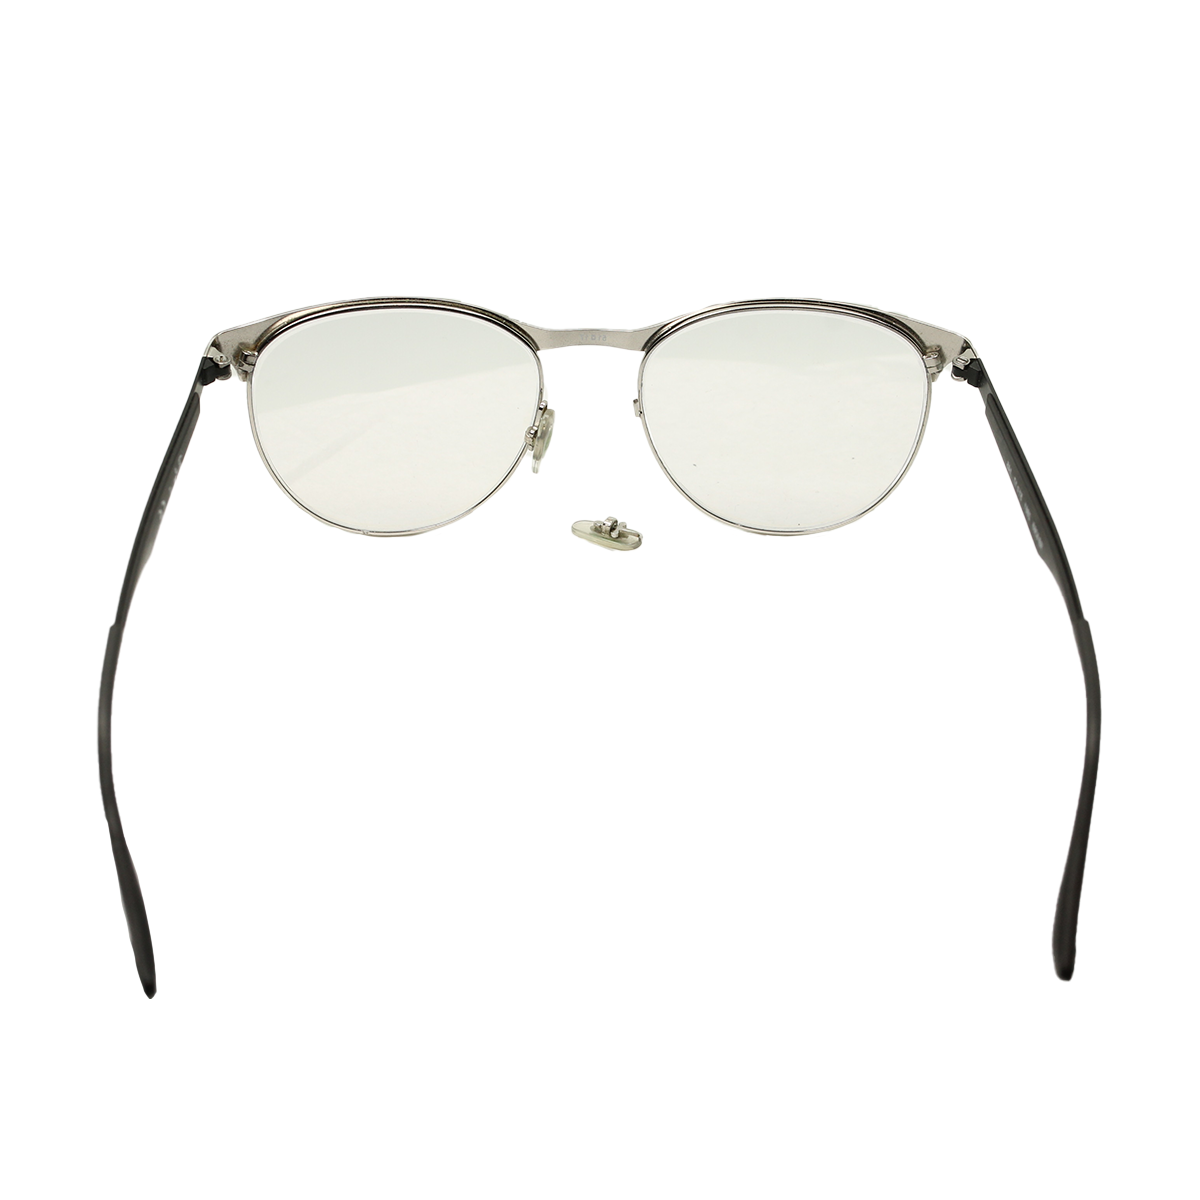 Chanel Eyeglass Repair  Chanel Sunglasses Repair